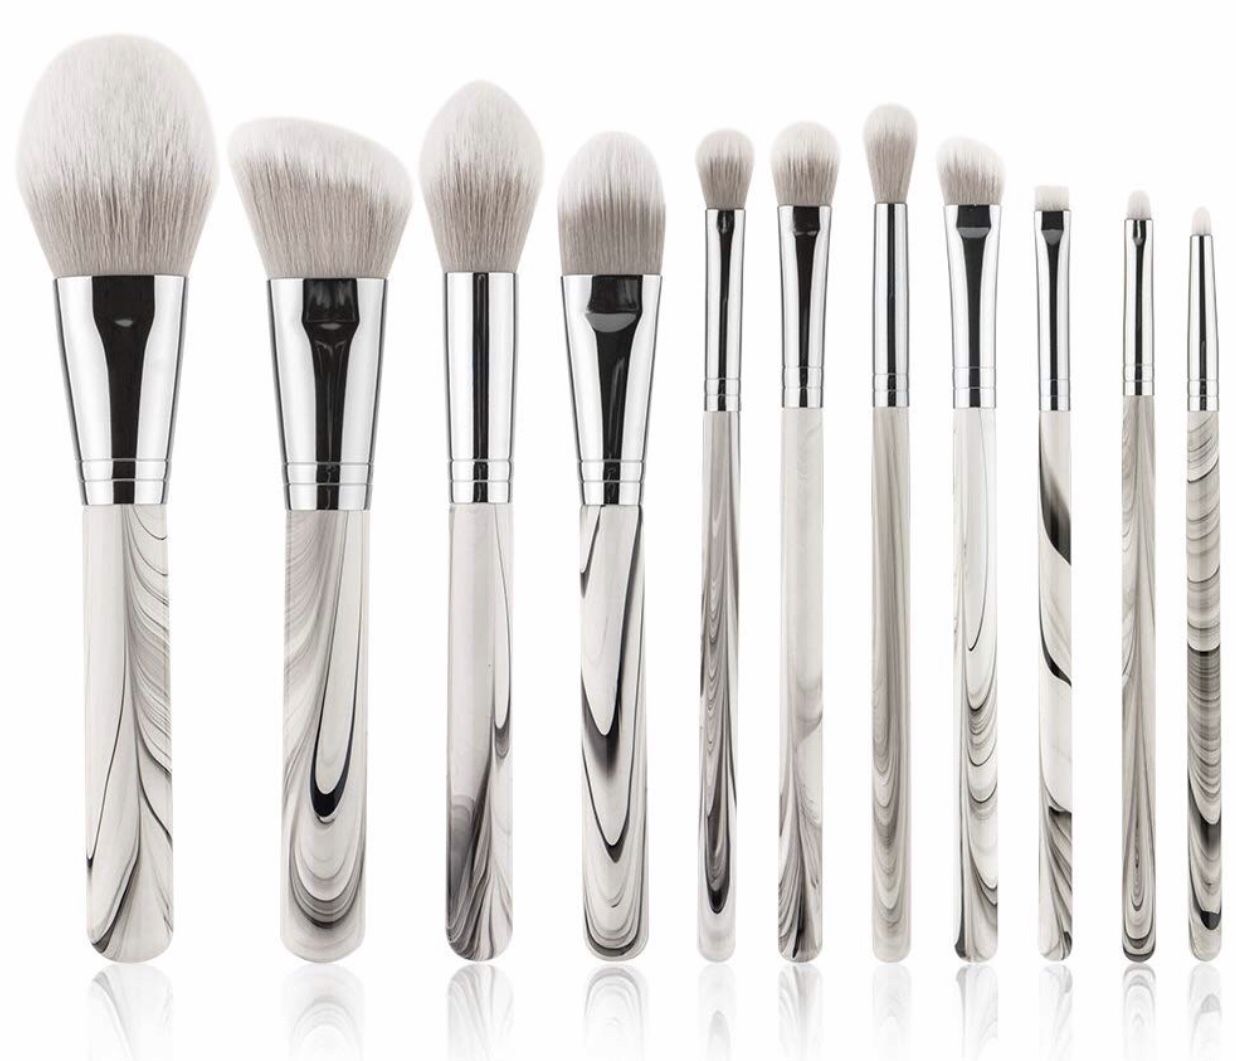 Brand new 11 Pieces Makeup Brush Set Professional Premium Synthetic Kabuki Foundation Blending Blush Concealer Eye Face Liquid Powder Cream Cosmetic